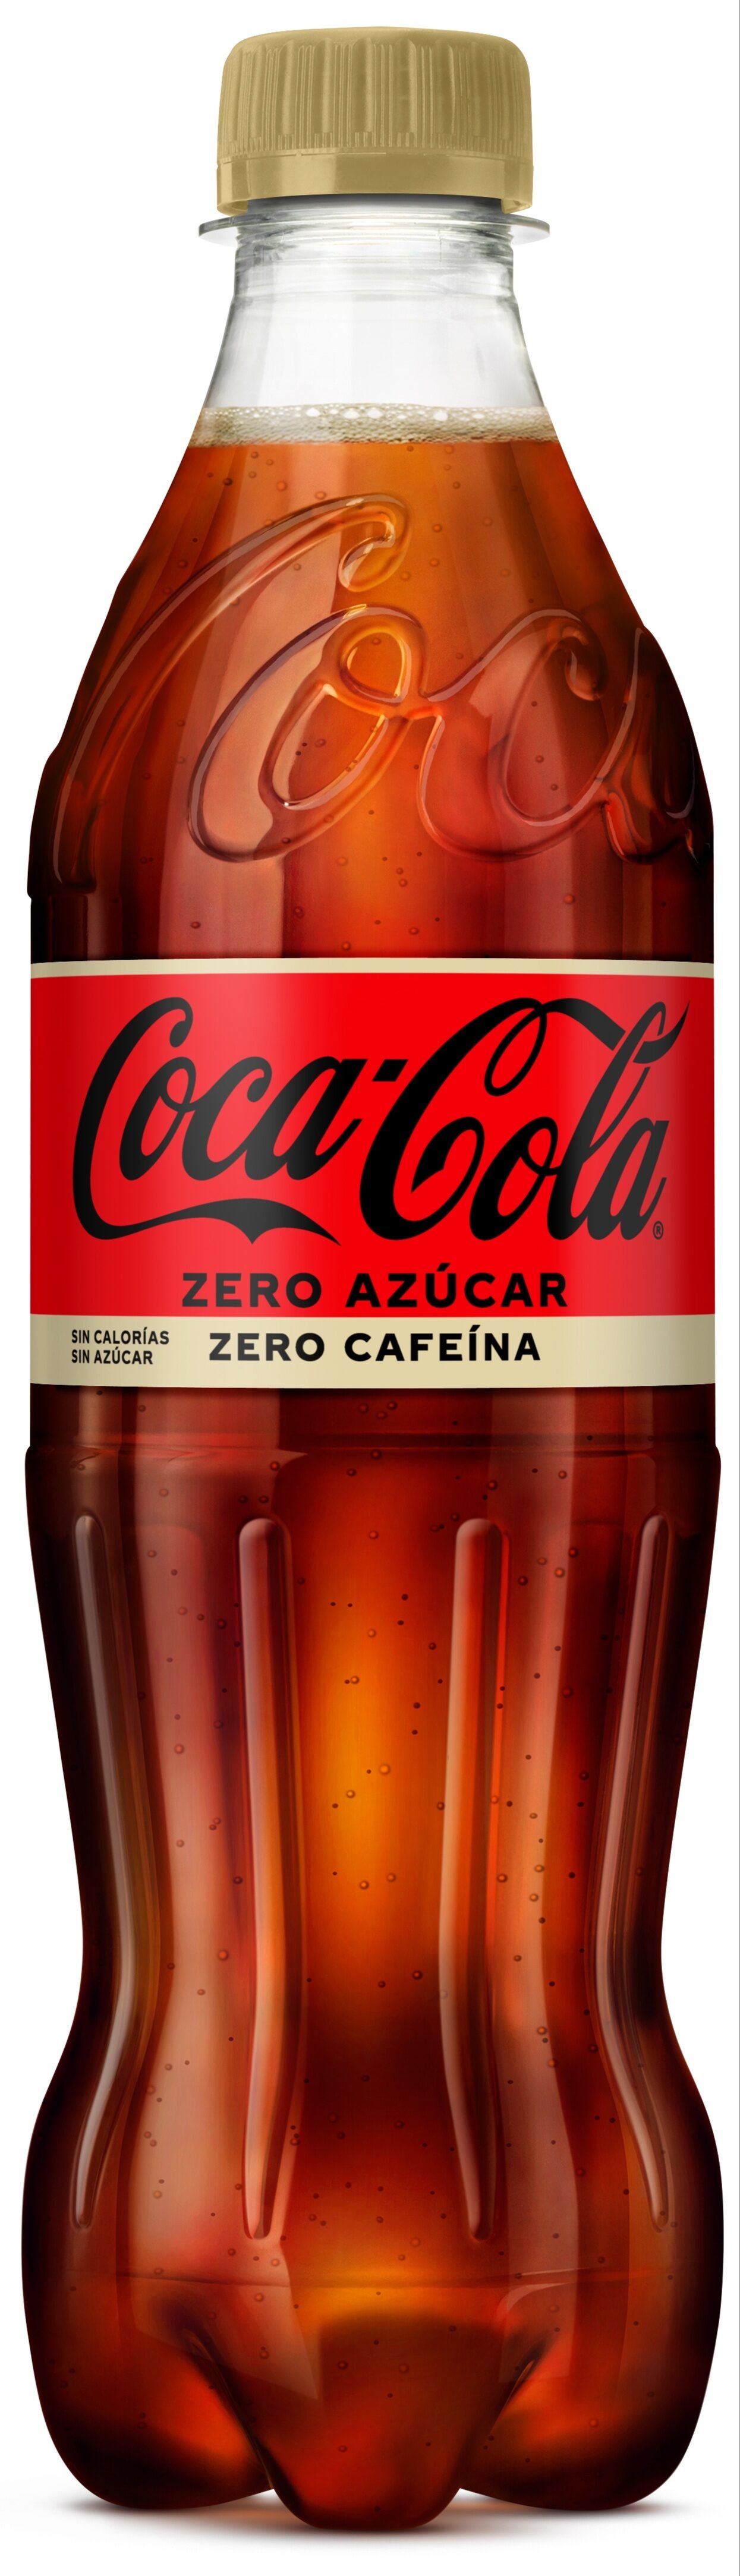 Coca-Cola Zero Zero - Produit